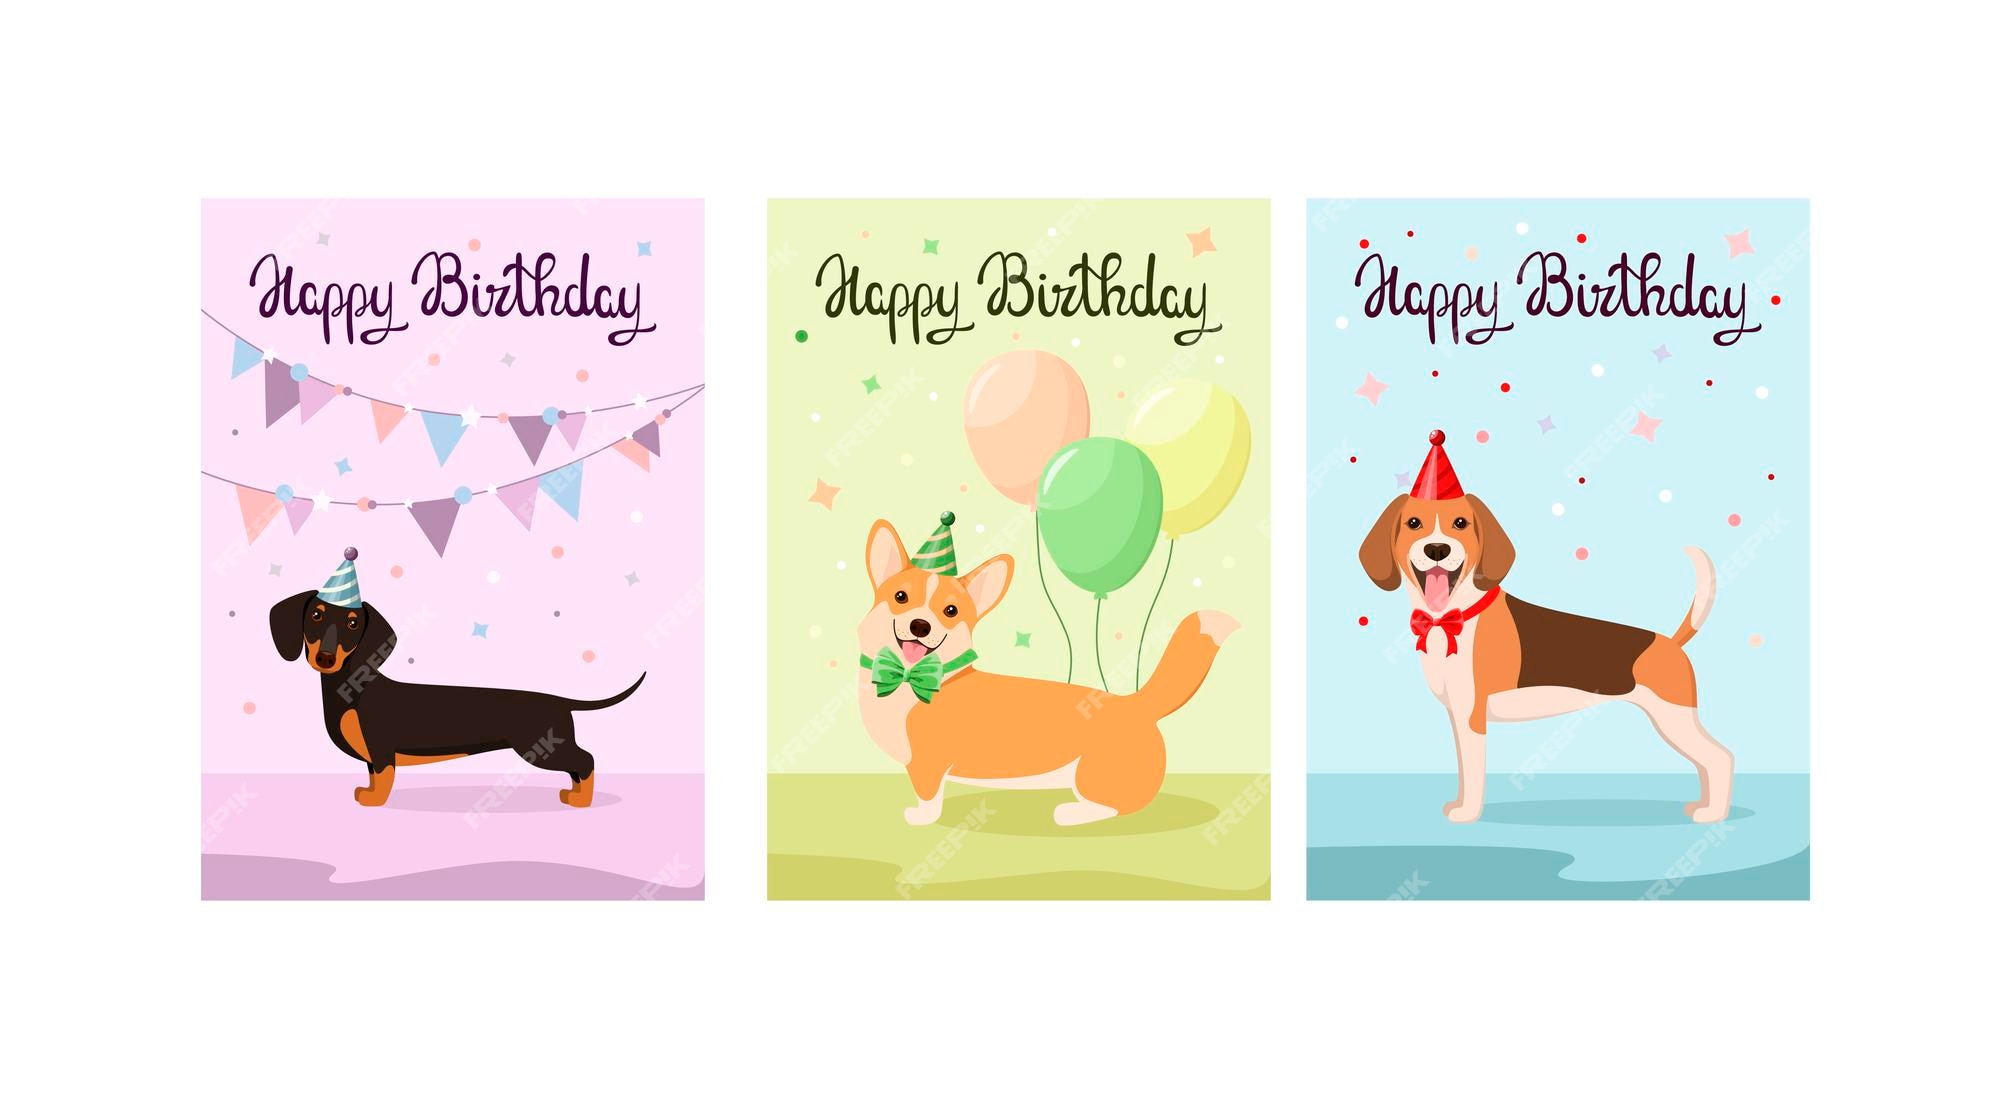 Happy Birthday Dog Images - Free Download on Freepik